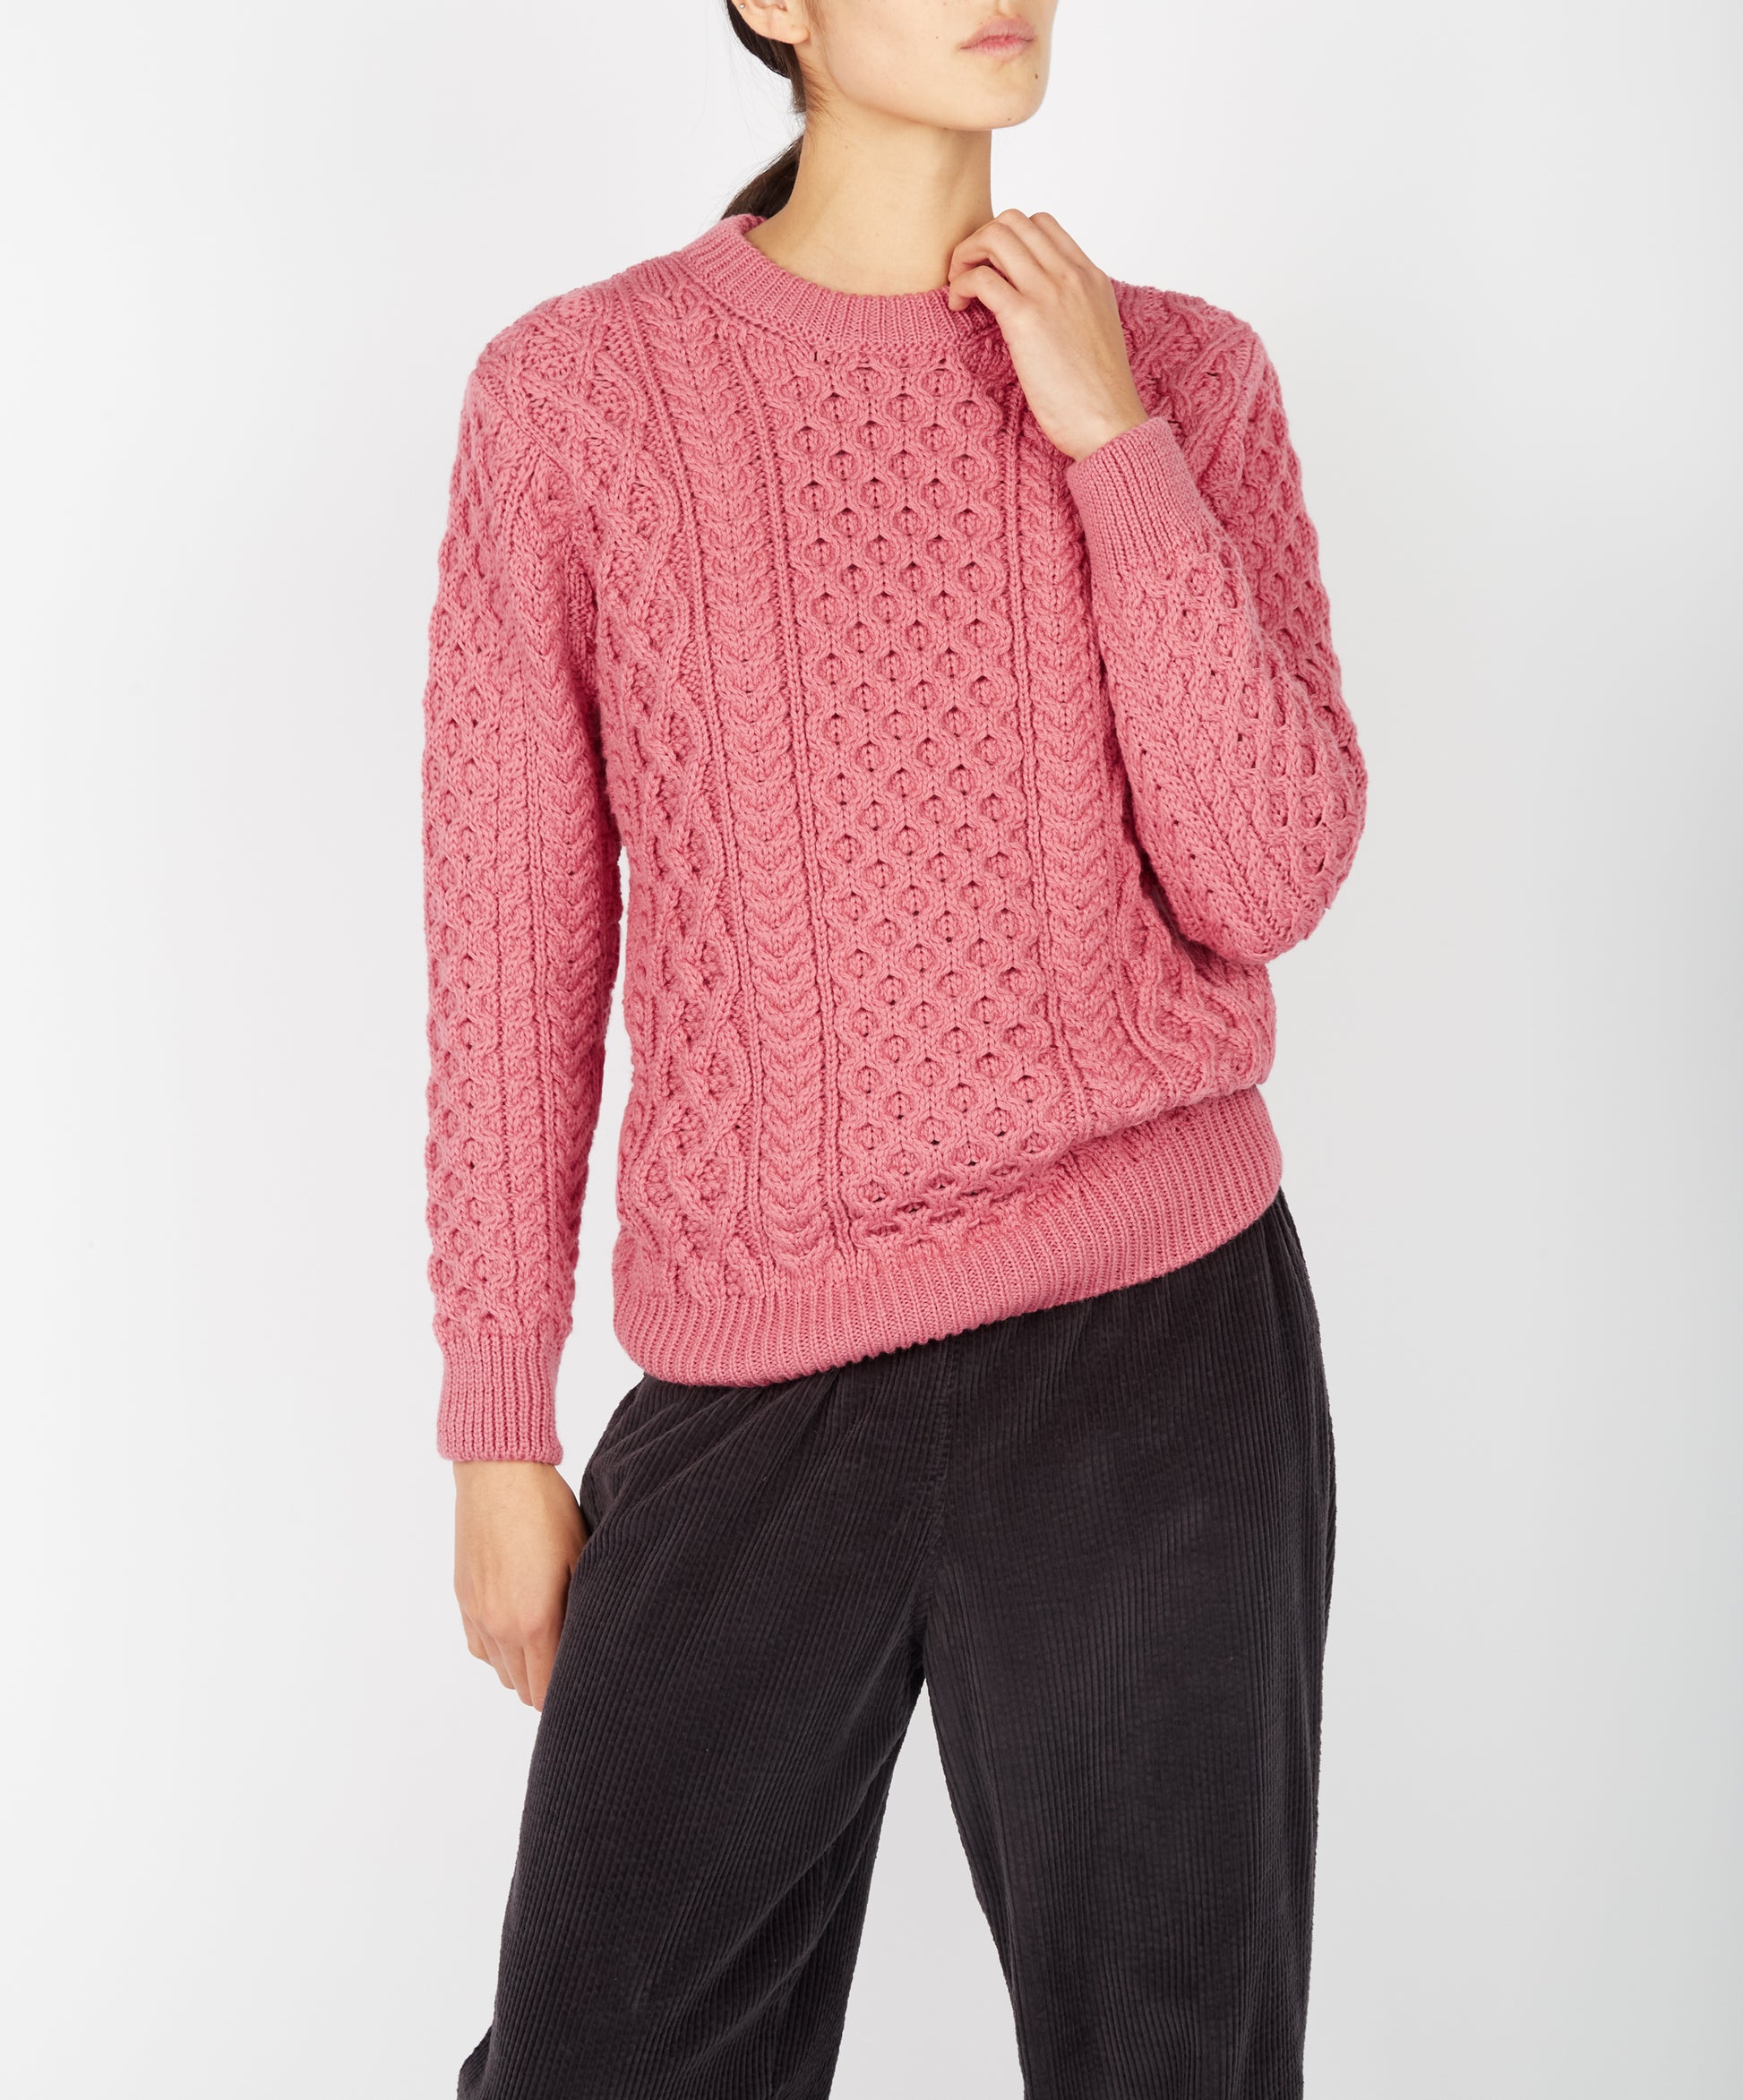 IrelandsEye Knitwear Blasket Honeycomb Stitch Womens Aran Sweater Rosa Pink